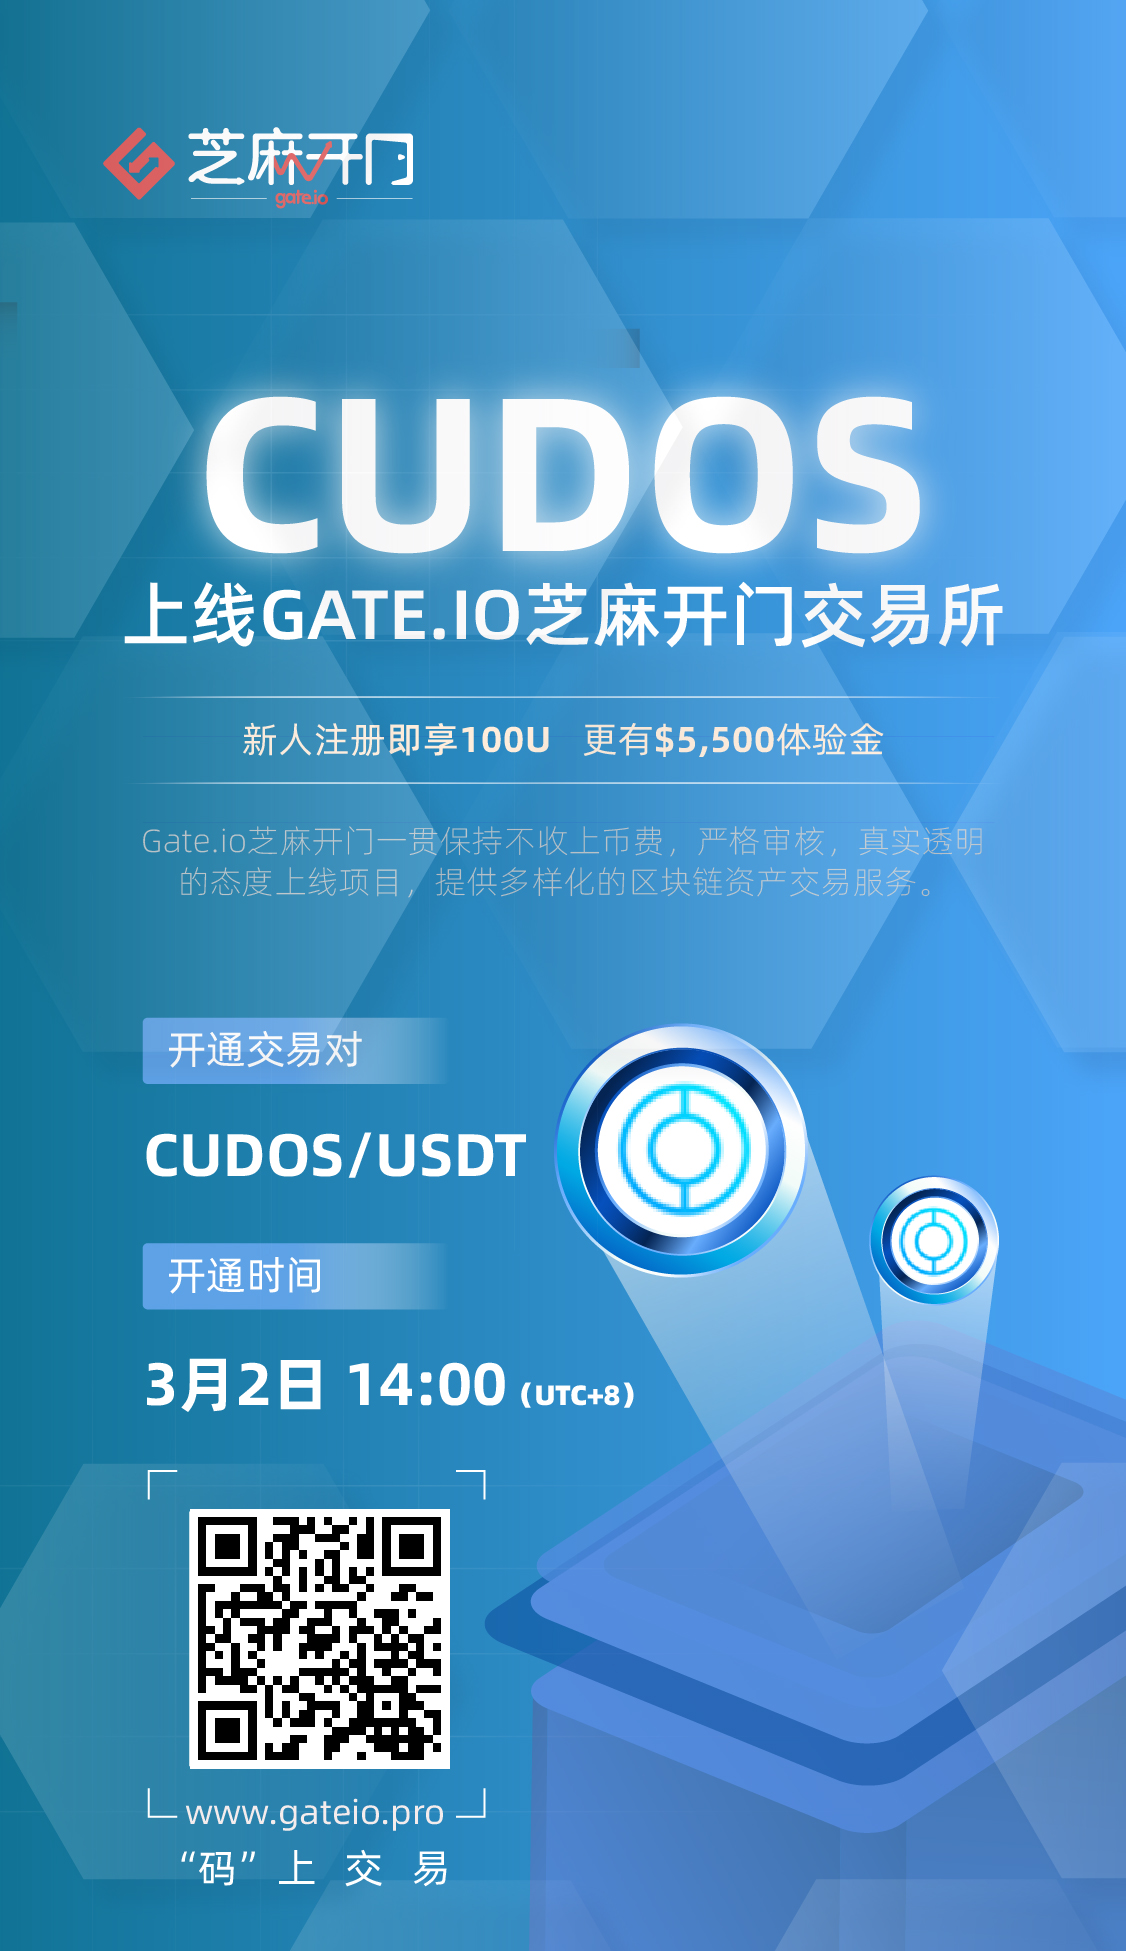 Gate.io 芝麻开门关于完成投票和上线 Cudos (CUDOS) 交易的公告